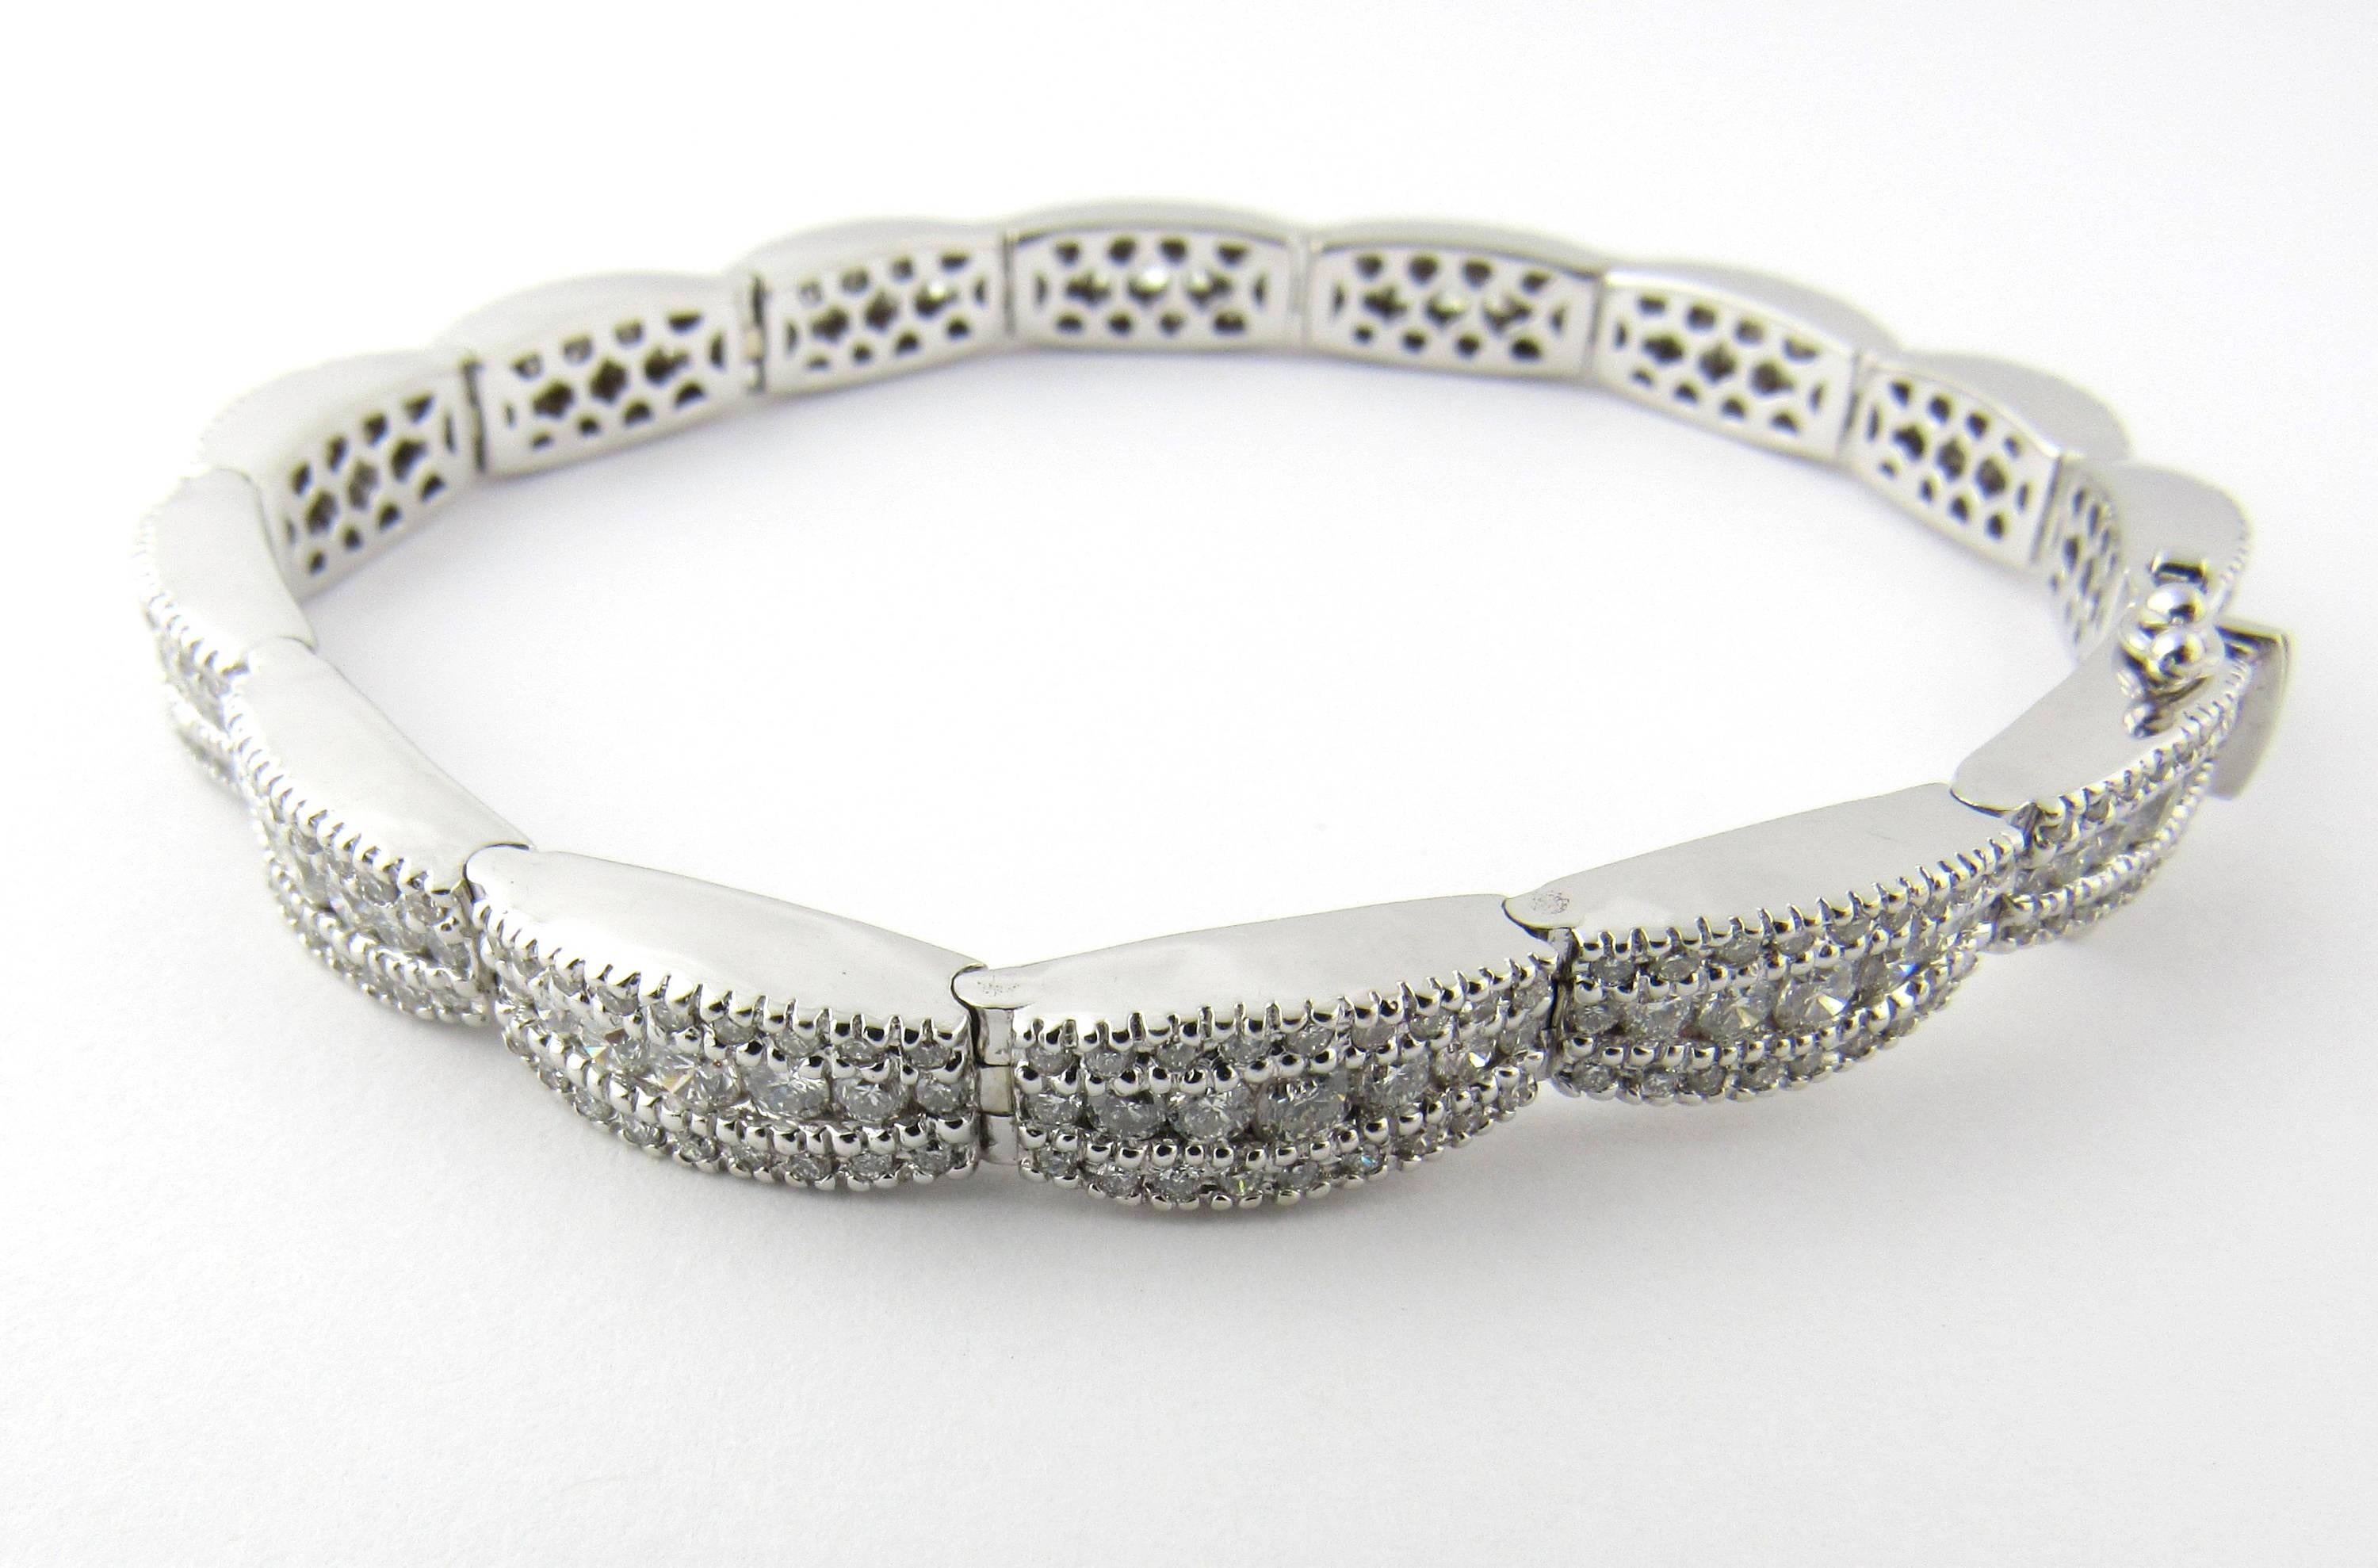 xiv karats white gold and diamond link bracelet